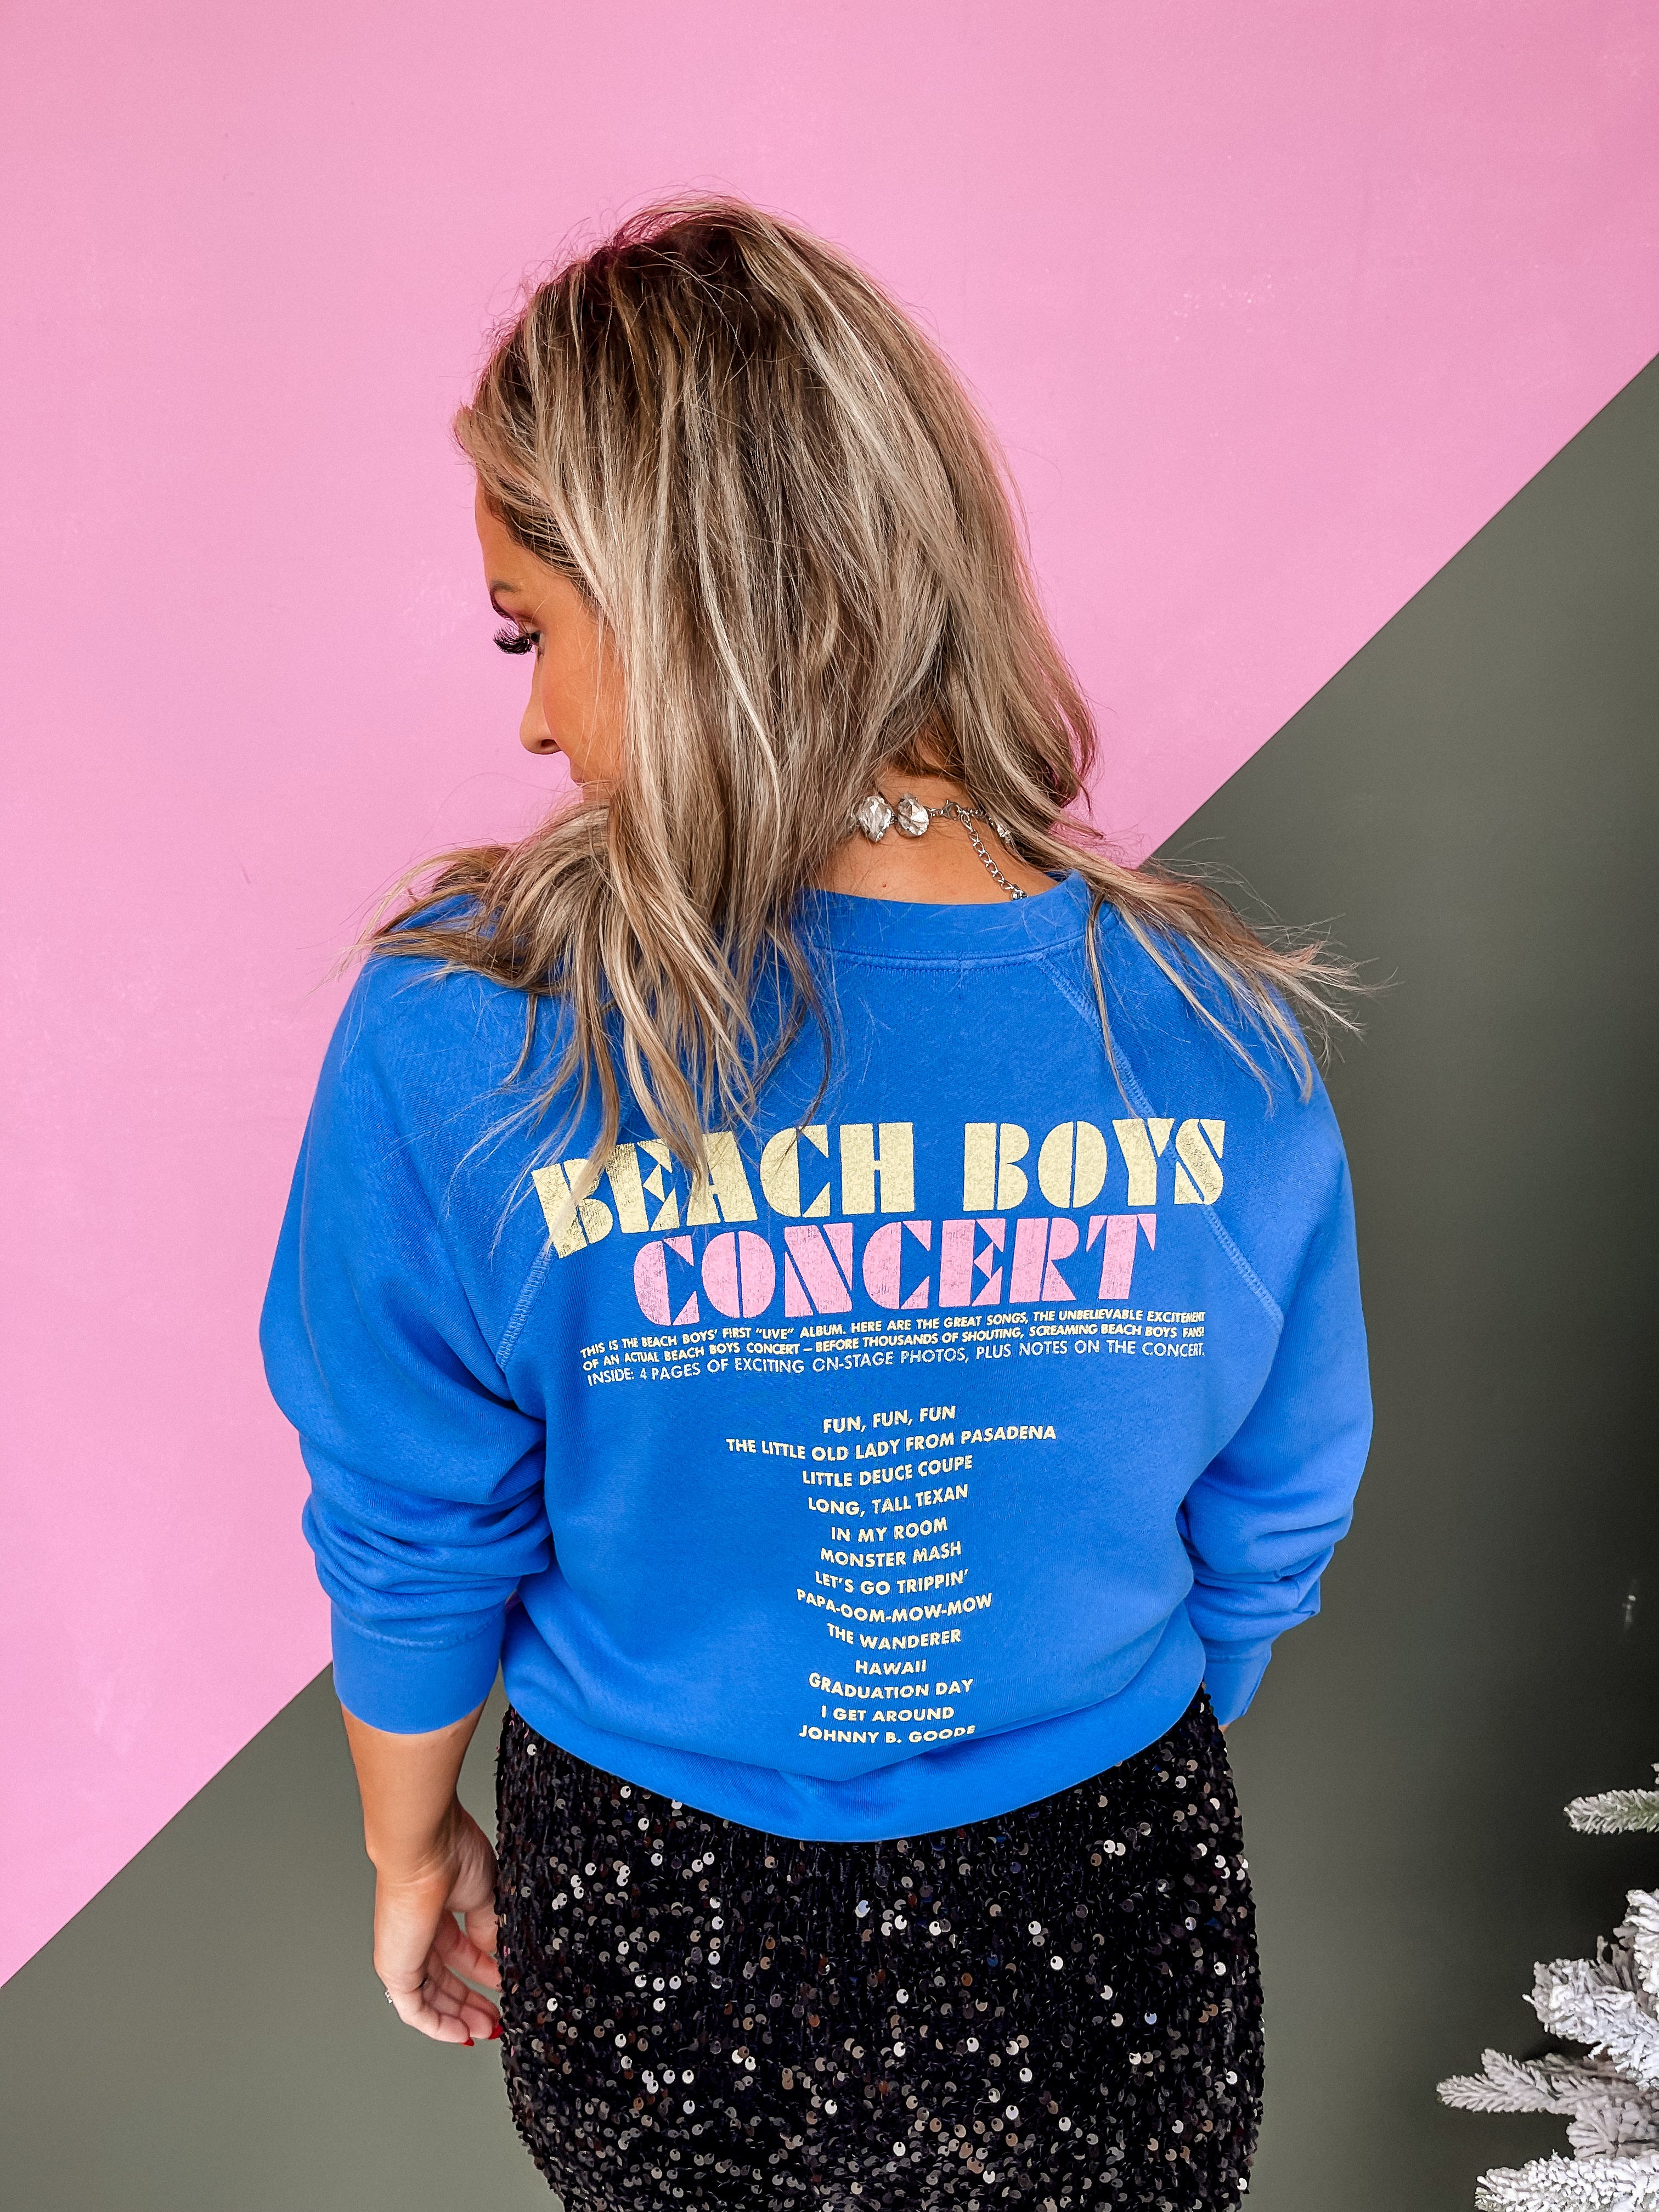 [Daydreamer] The Beach Boys Concert Raglan Crew